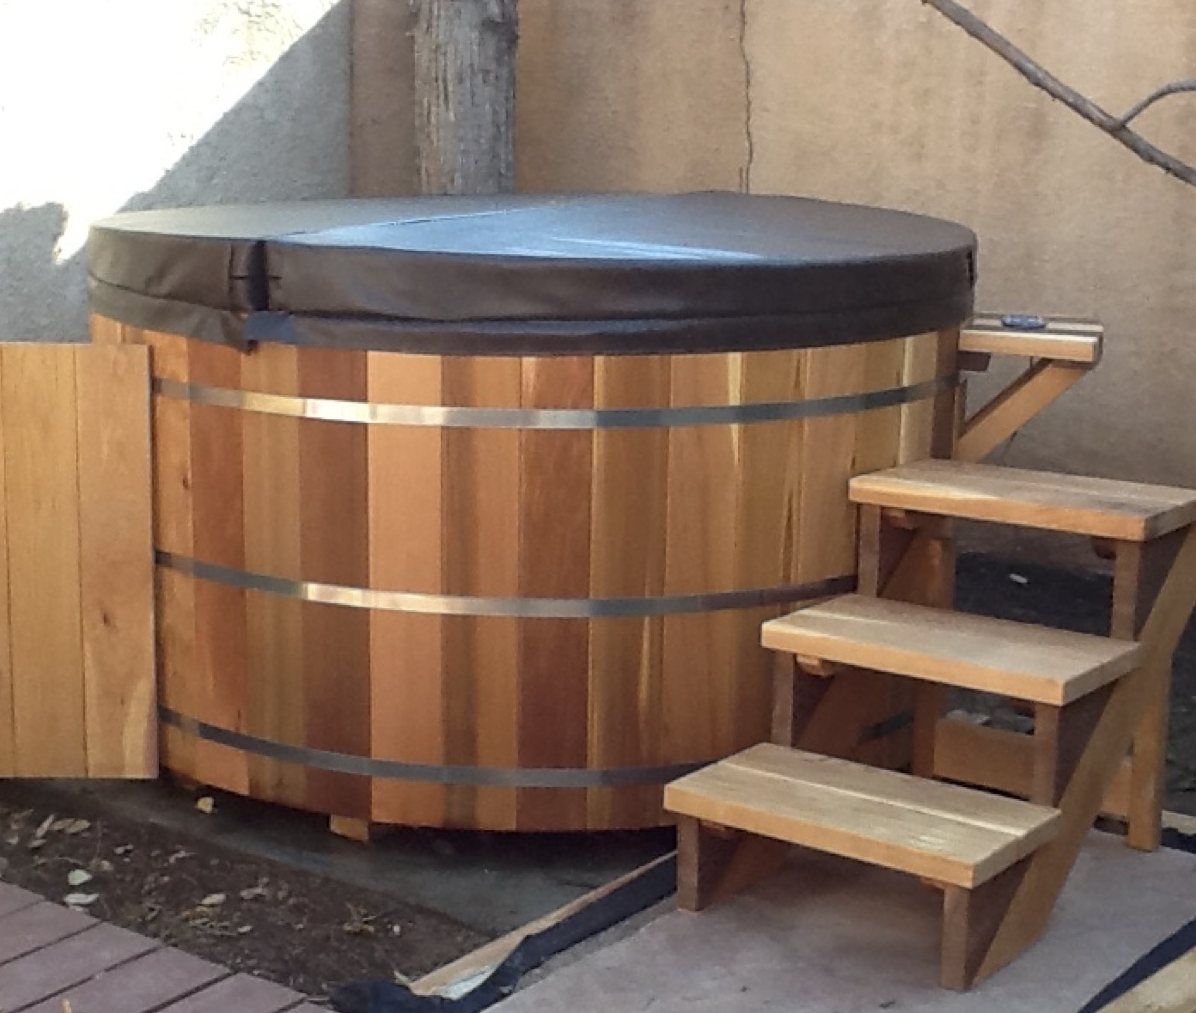 6' round cedar hot tub with vinyl cover